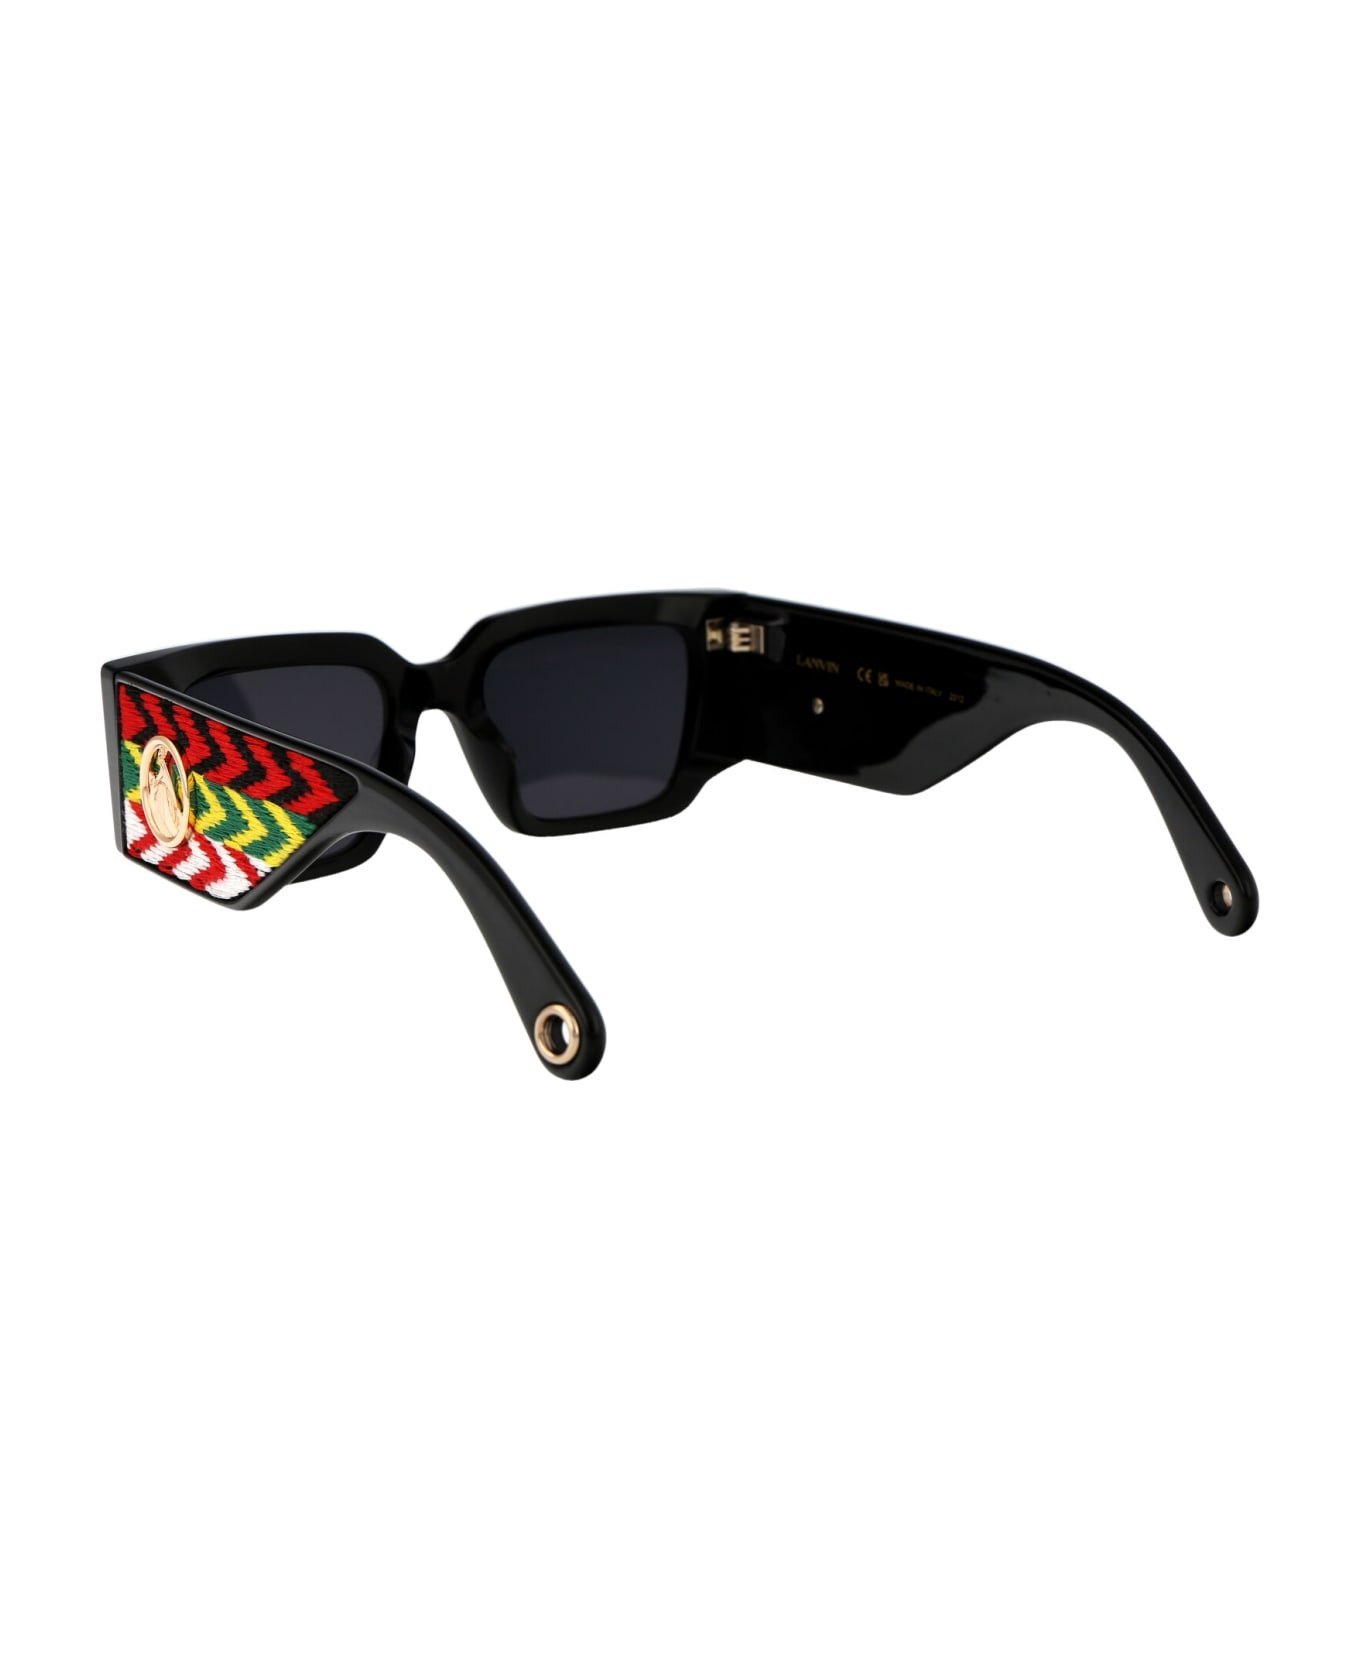 Lanvin Lnv639s Sunglasses - 001 BLACK サングラス